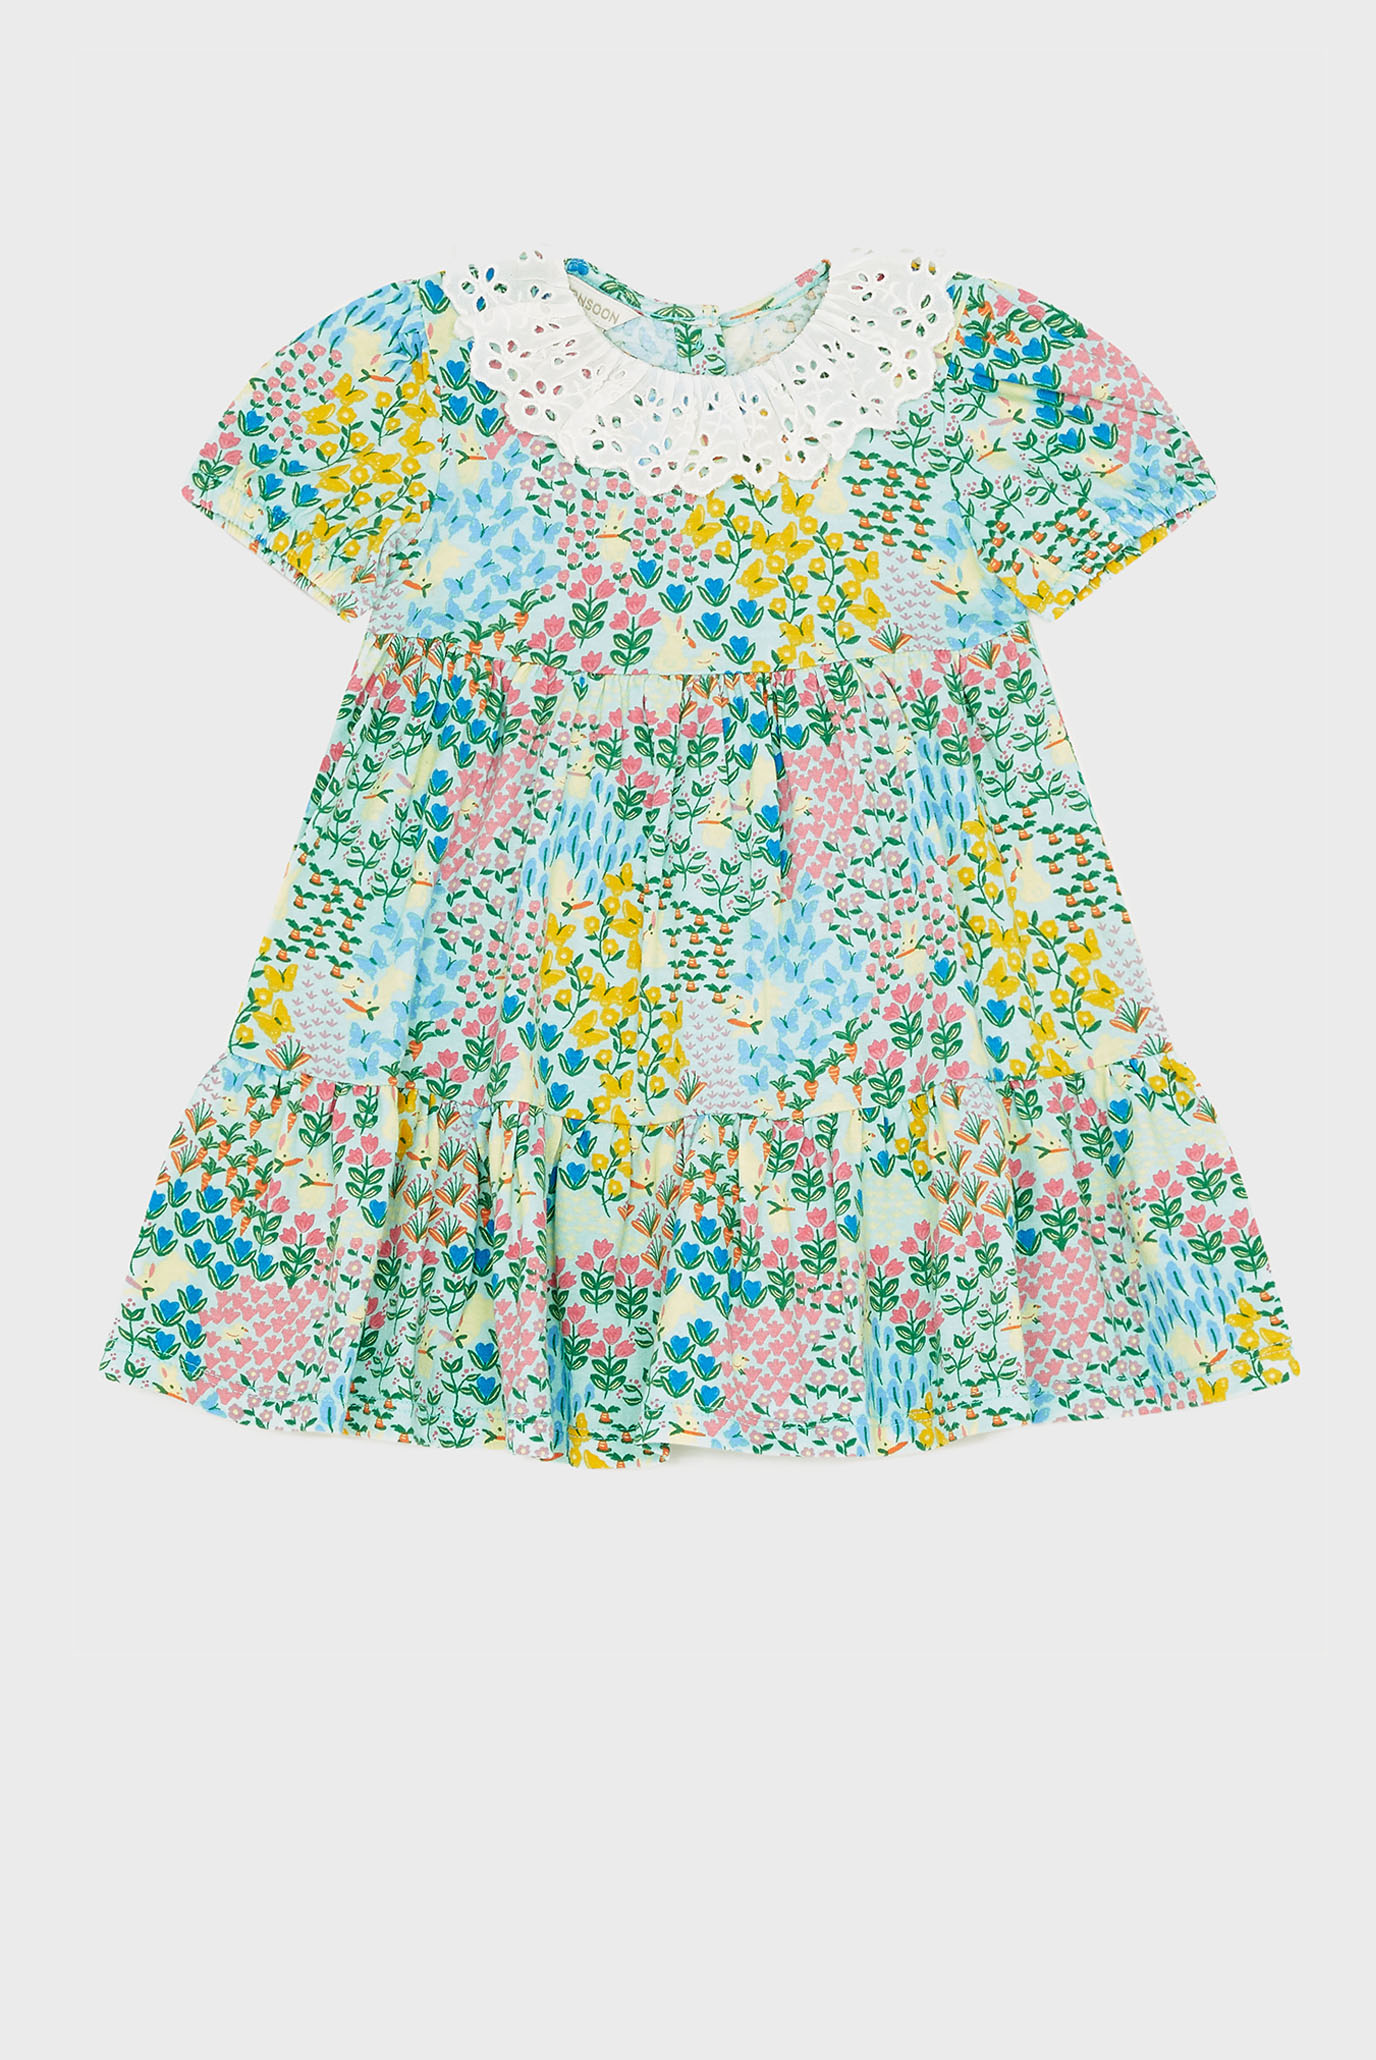 Дитяча сукня з візерунком BABY DITSY FLORAL 1